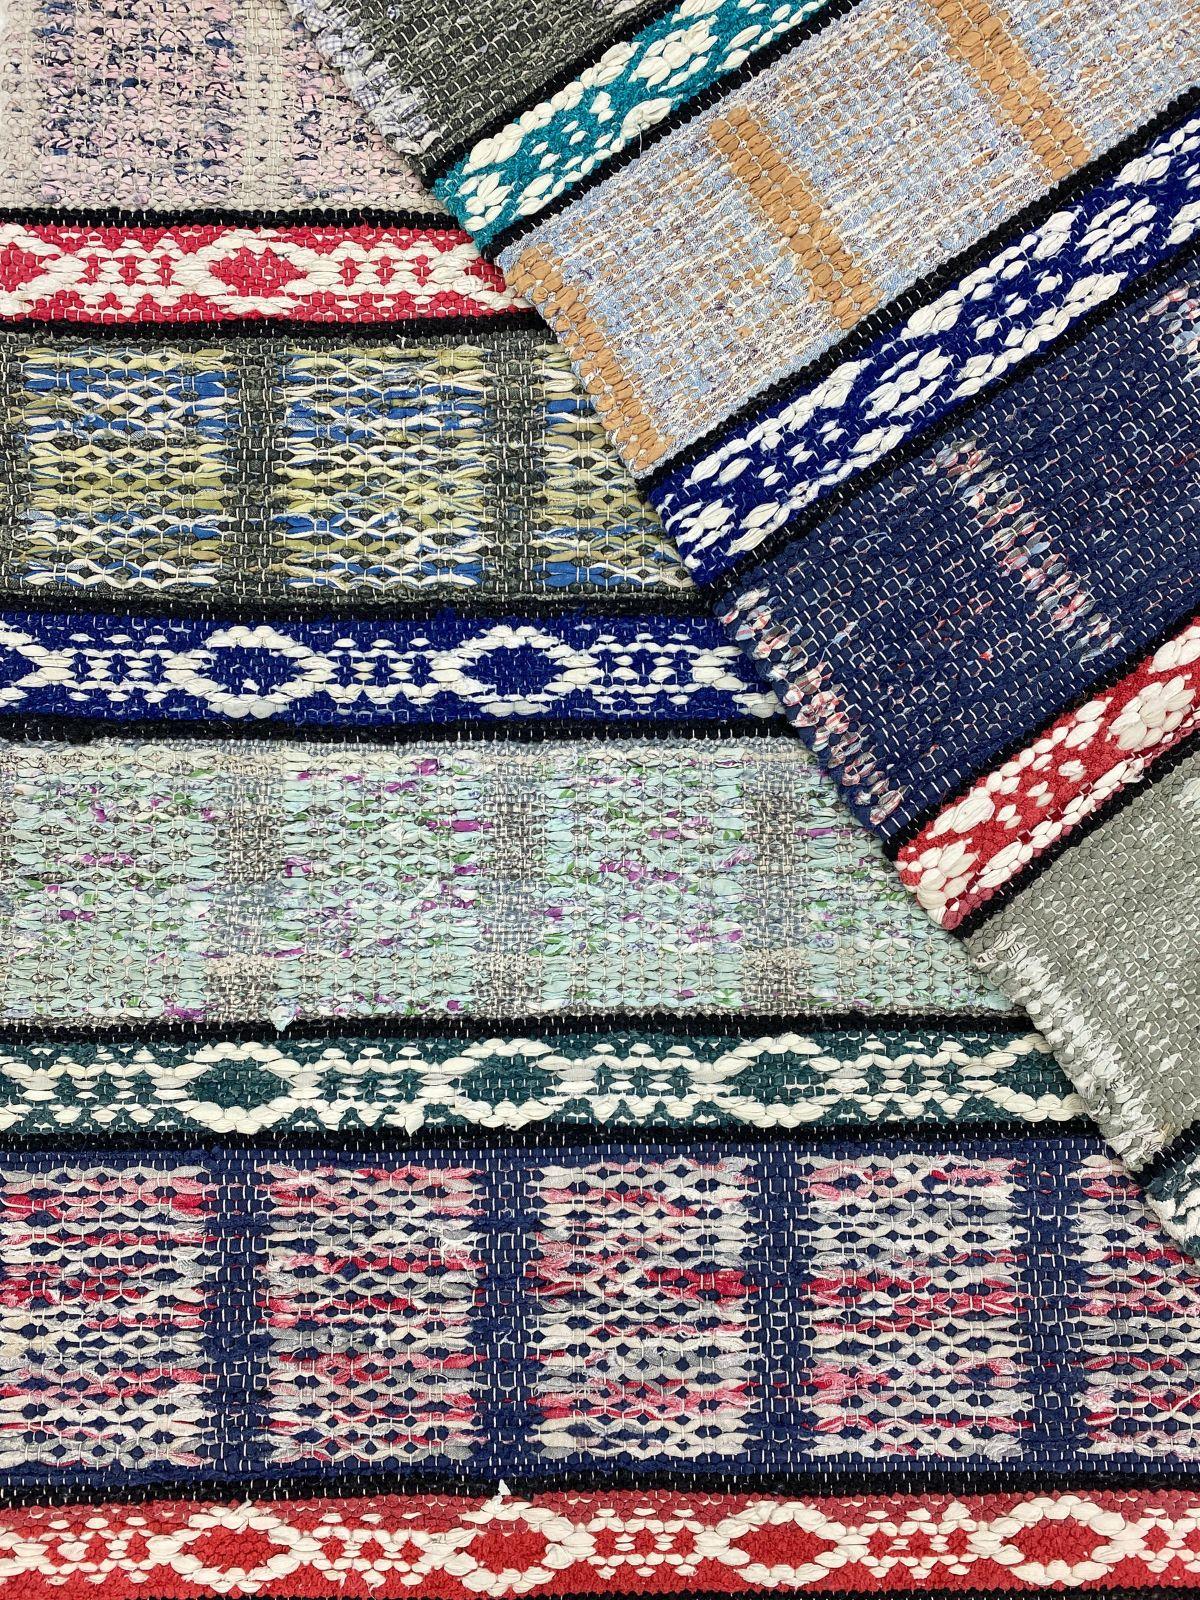 Hand-Woven 20th Century Swedish rag rug Ölands Eddy´s sommaräng Vallmo - handwoven  For Sale